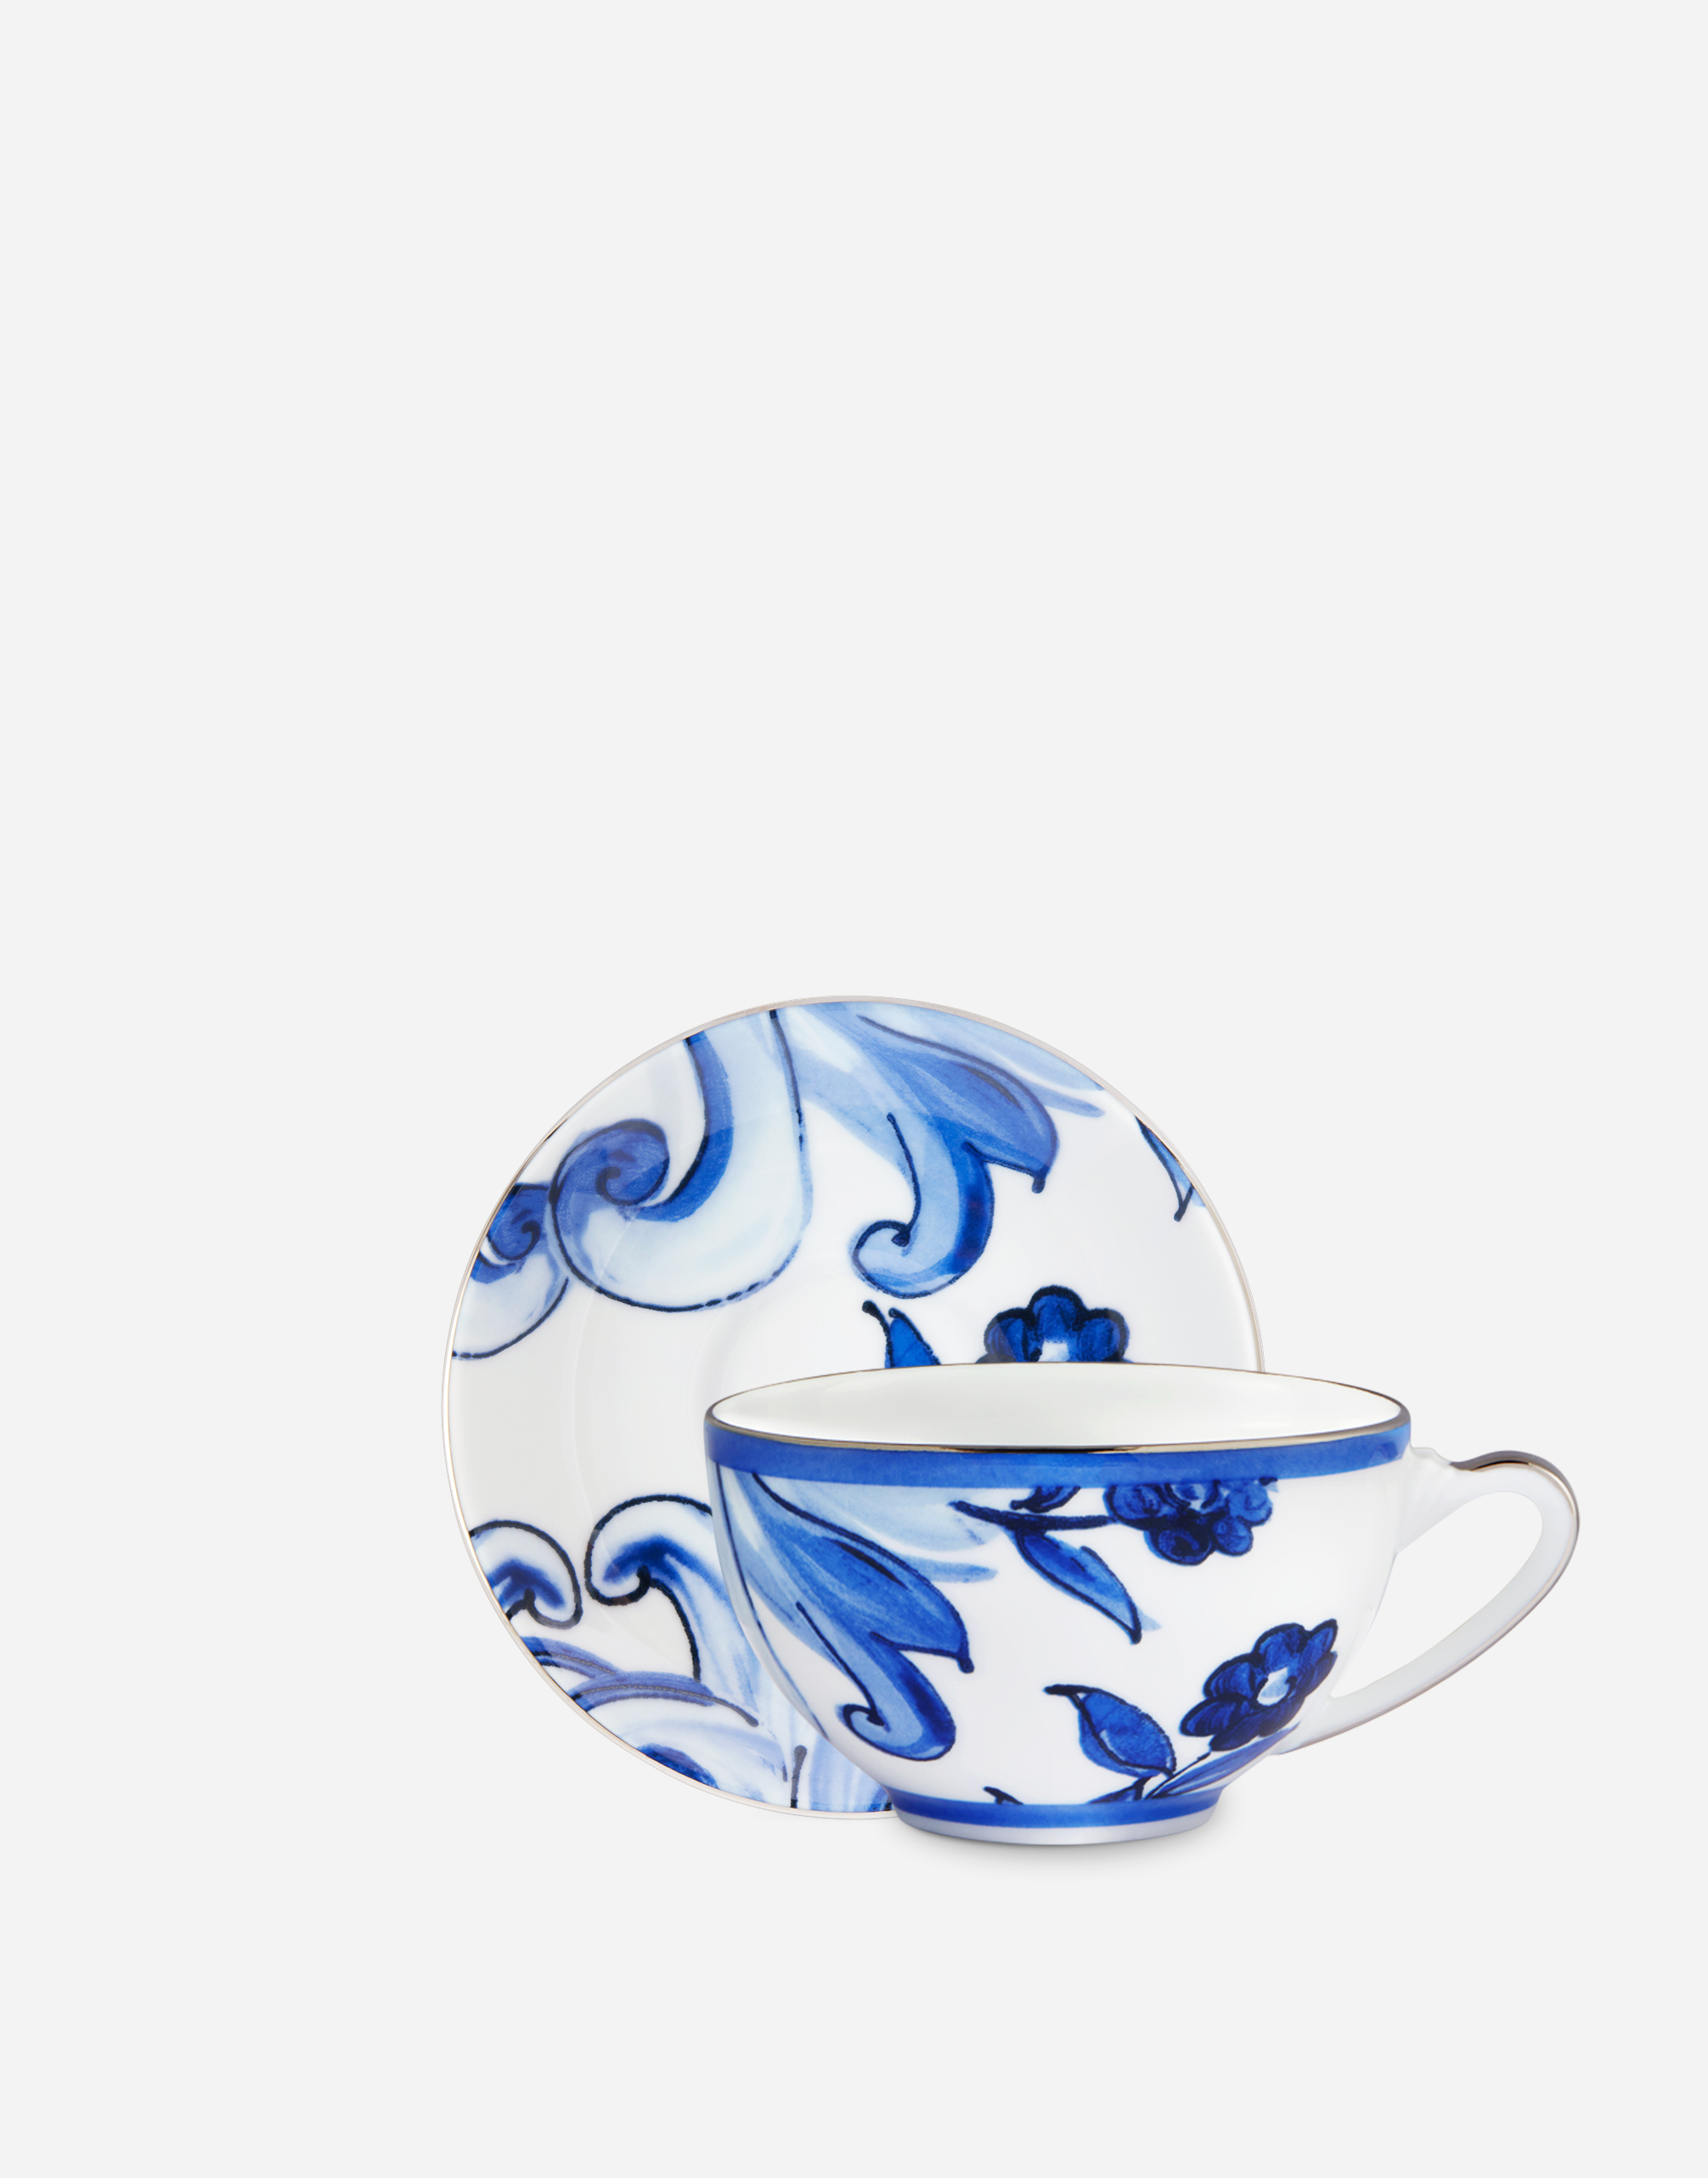 Porcelain Tea Set in Multicolor